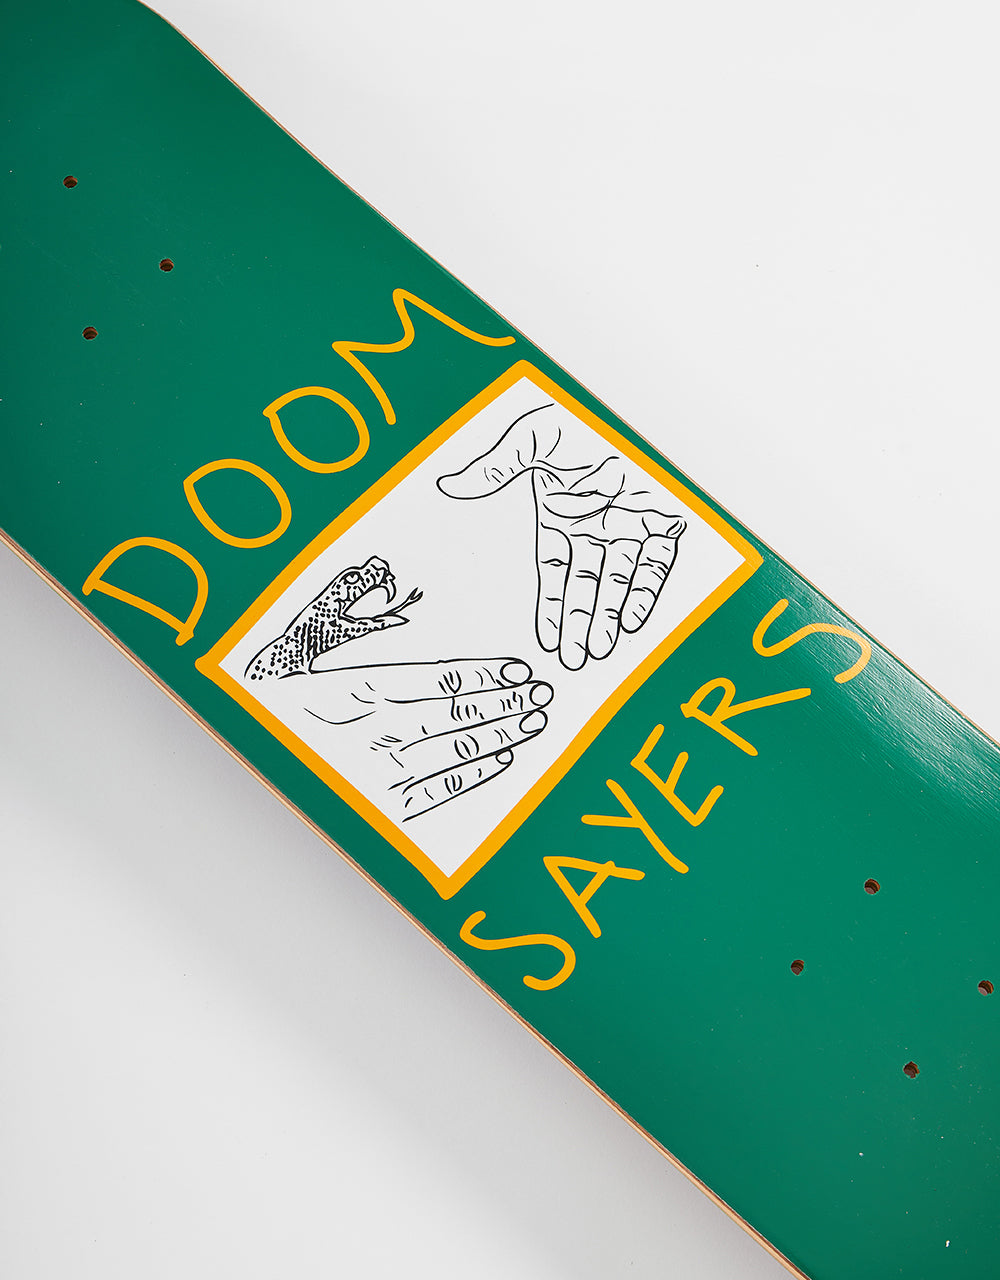 Doom Sayers Snake Shake GRN Skateboard Deck - 8"